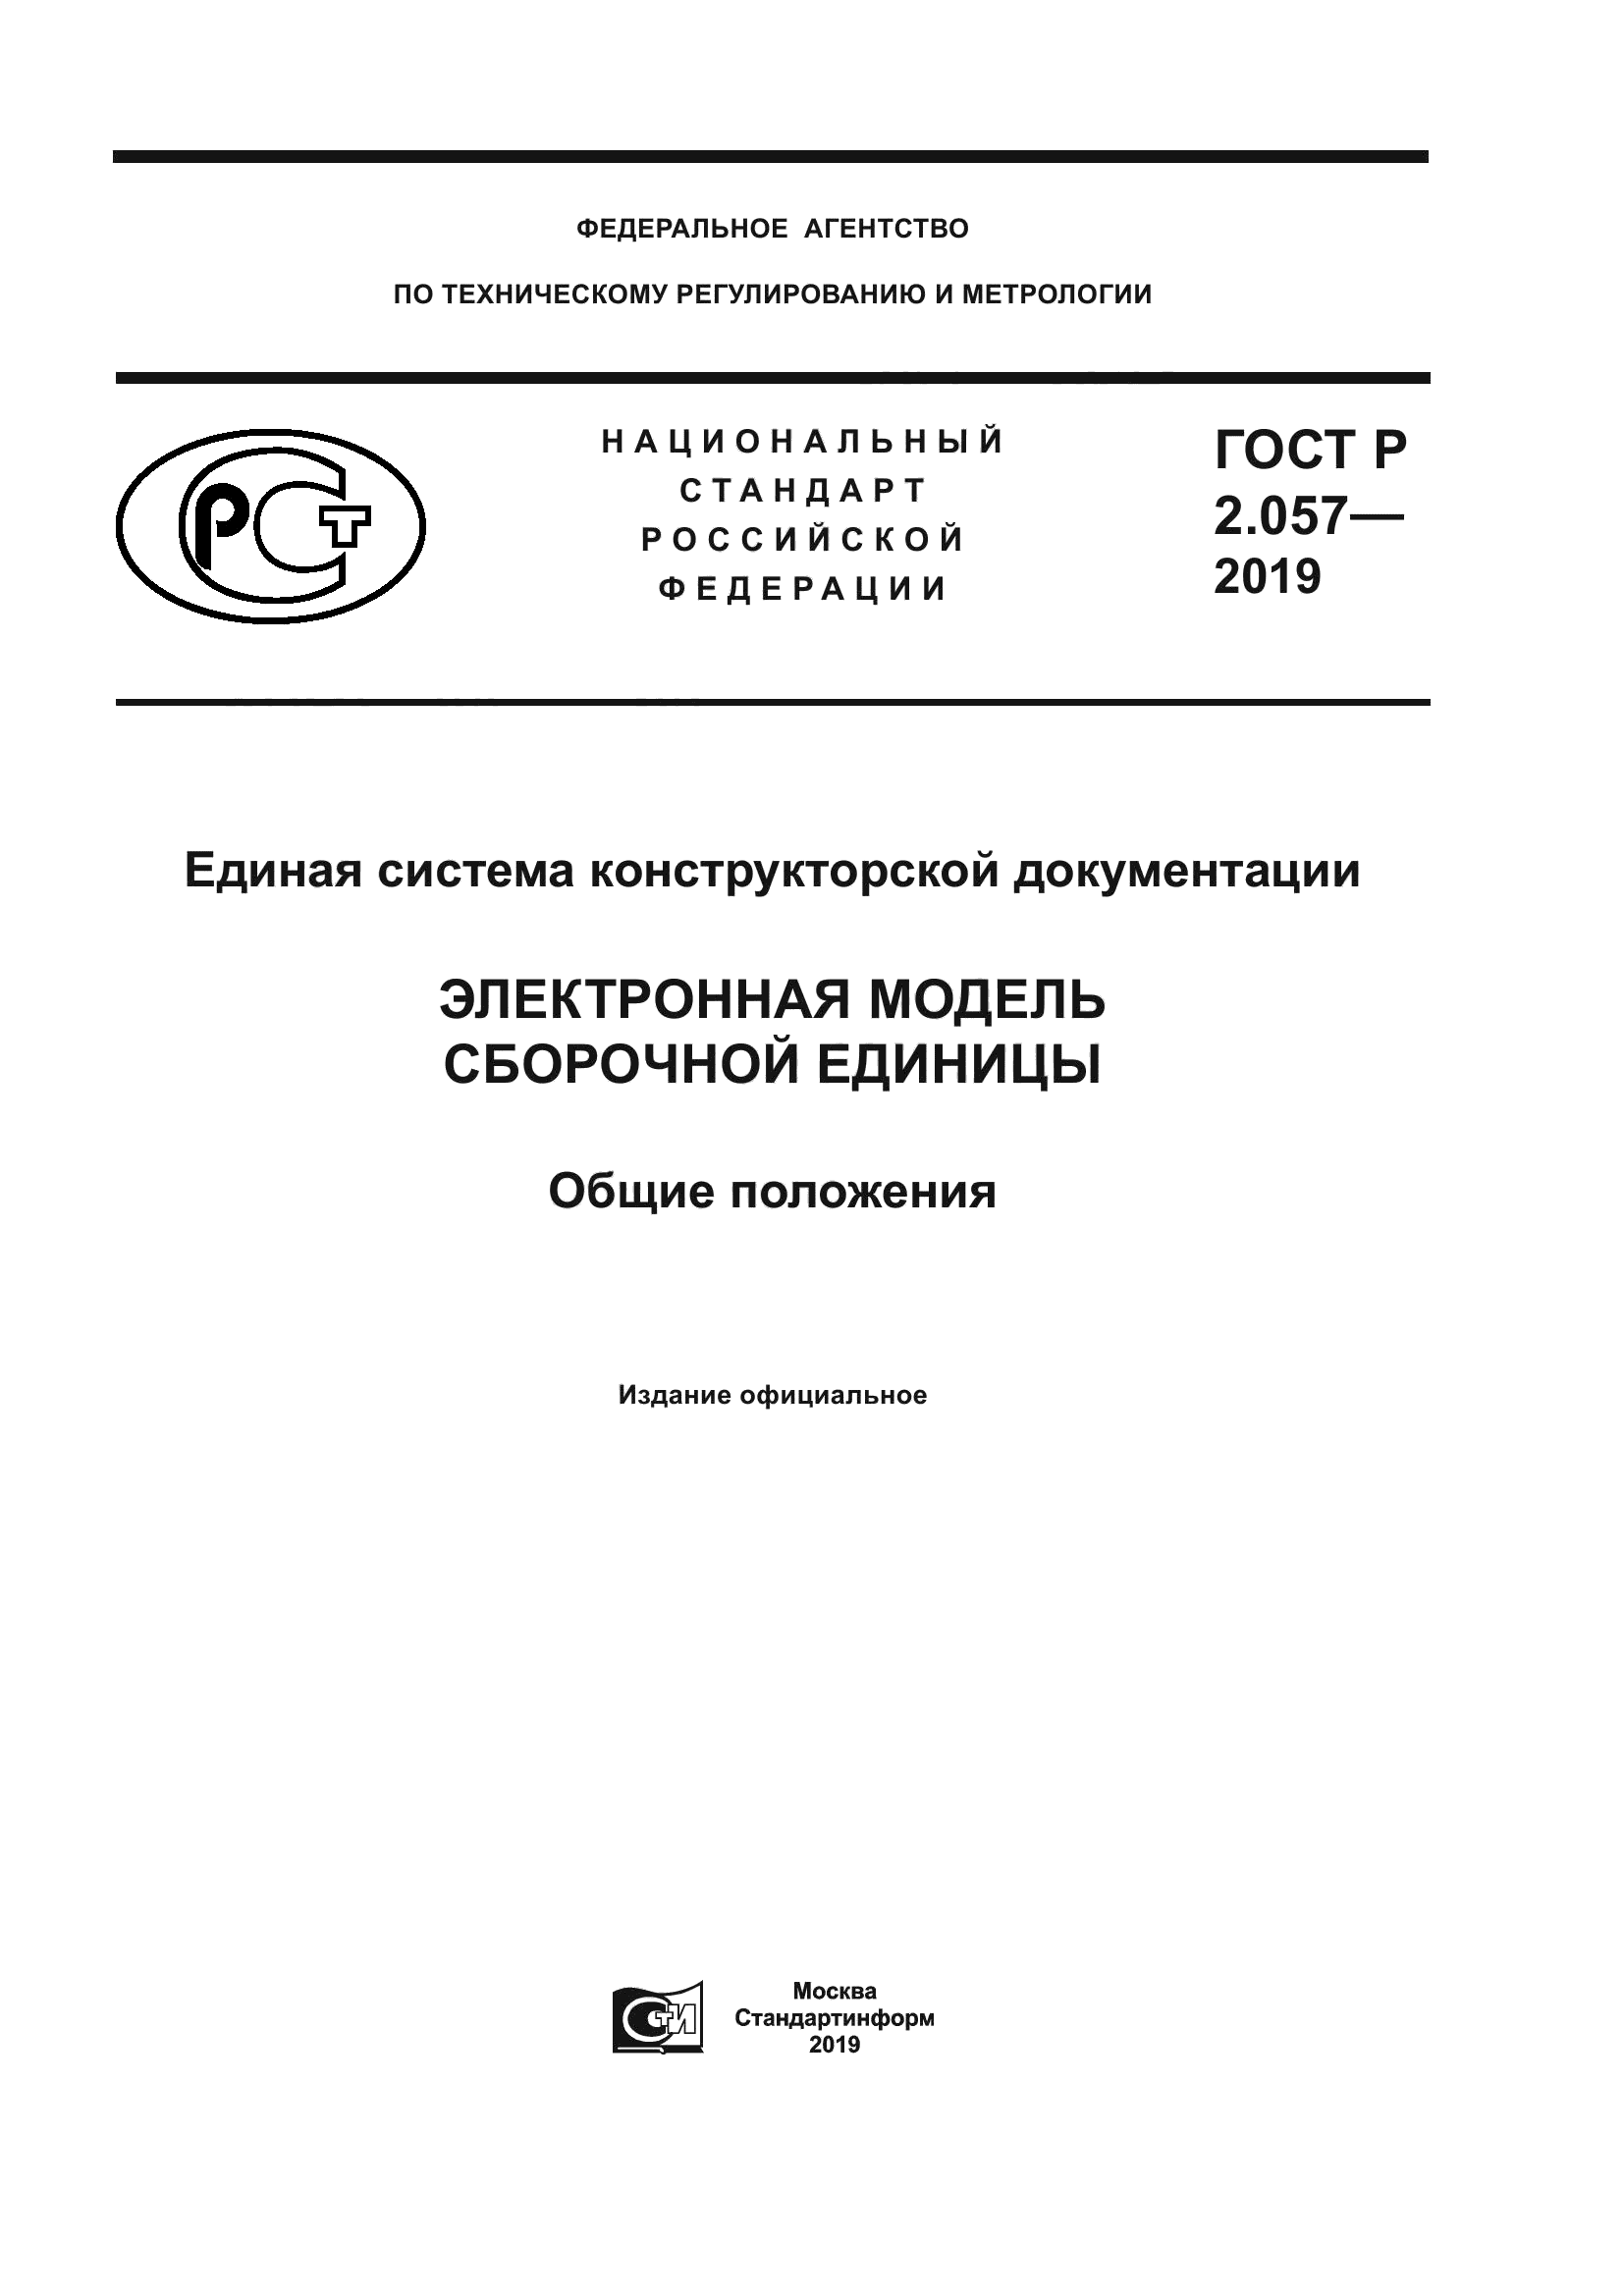 ГОСТ Р 2.057-2019